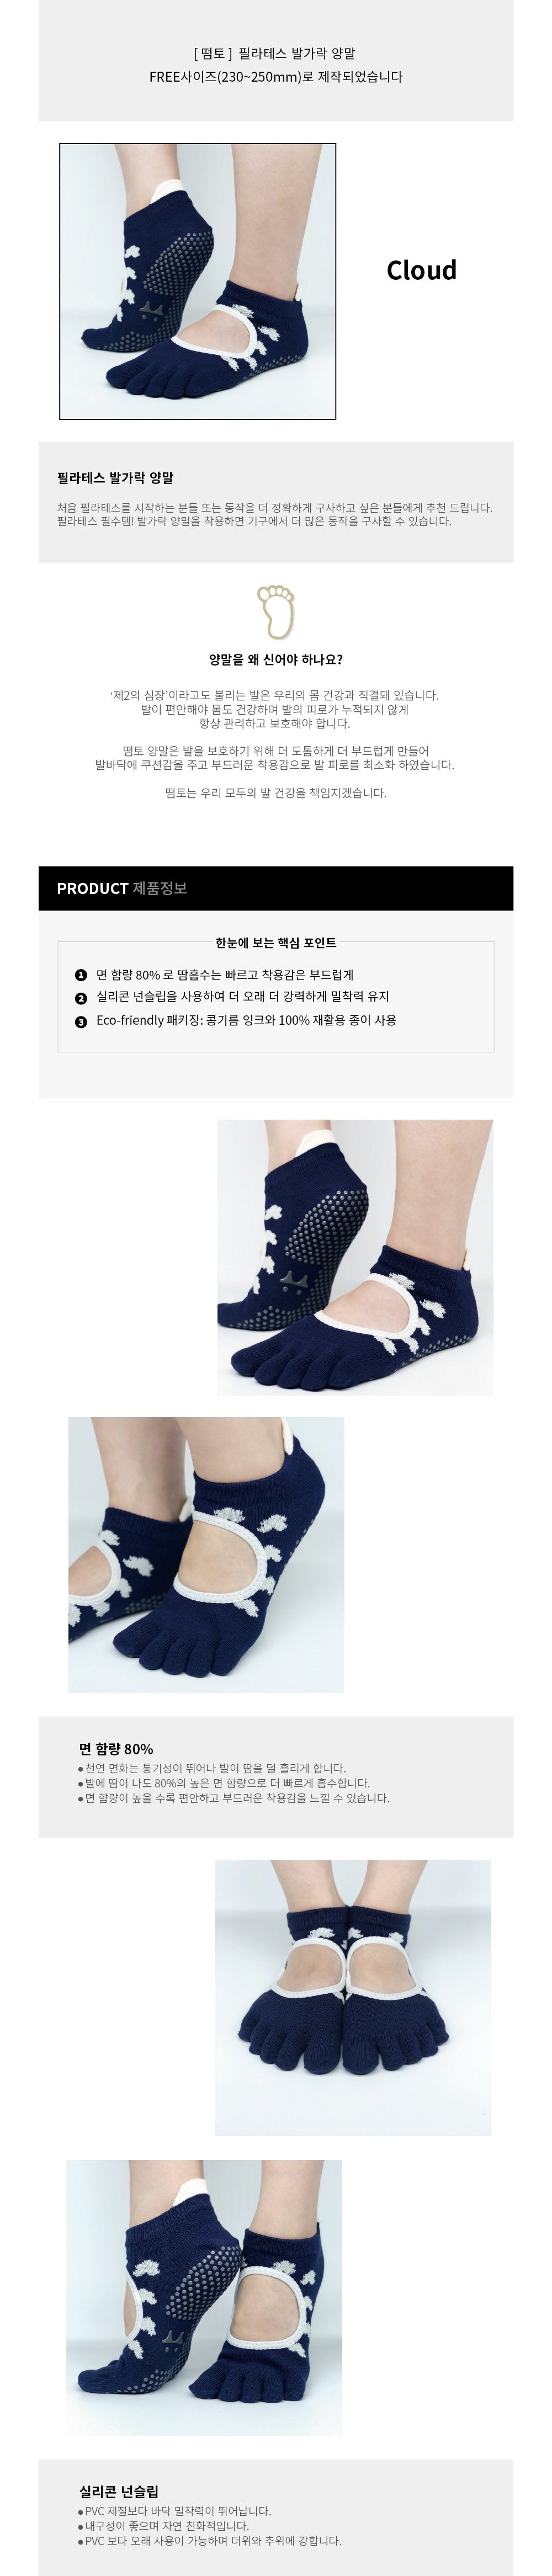 (Jennie's Pick!) thumb toe Pilates Toe Socks - Cloud